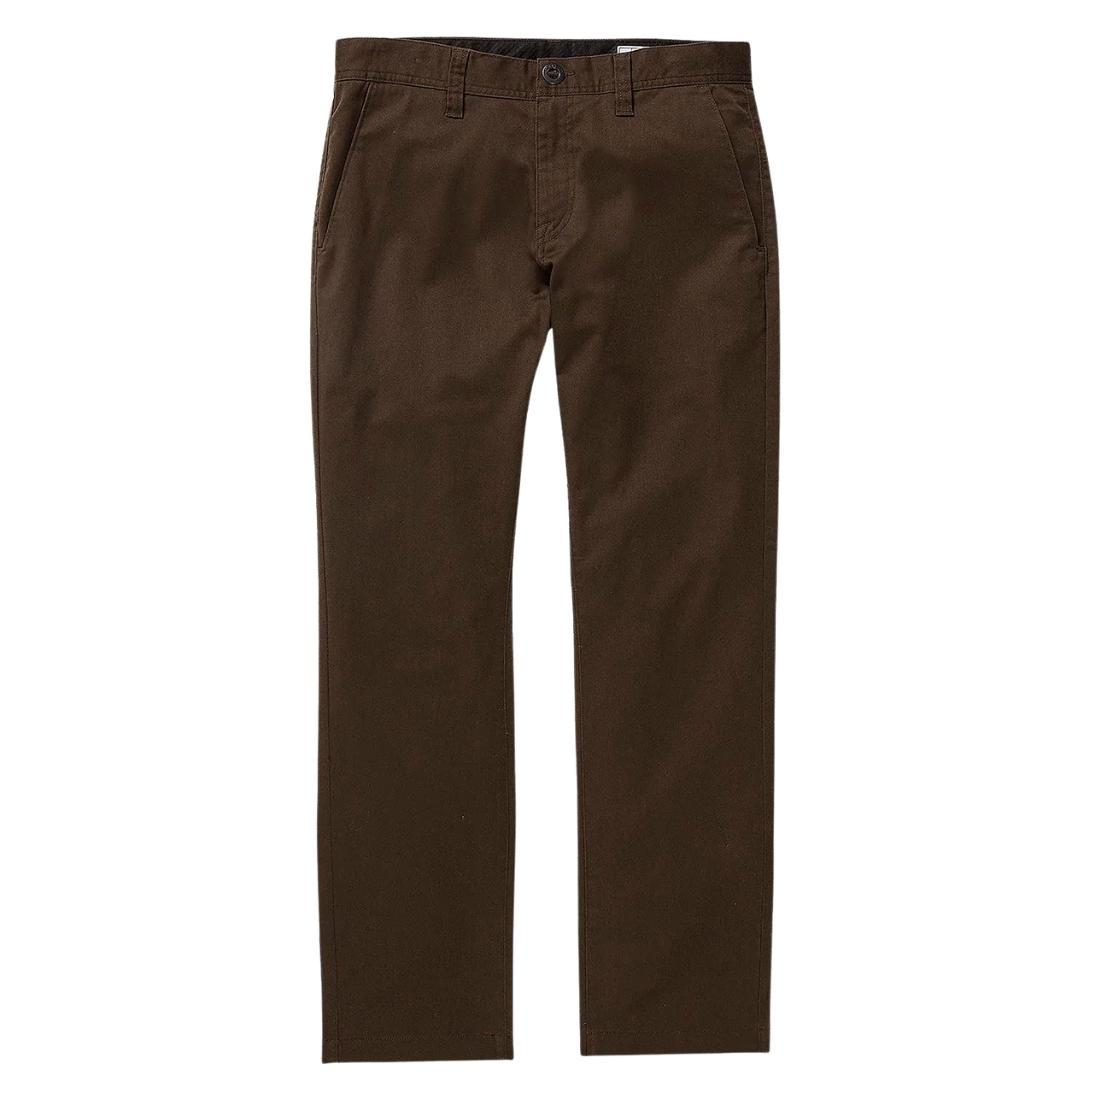 Volcom Frickin Modern Stretch Chino Pants/Trousers - Dark Brown - Mens Chino Pants/Trousers by Volcom